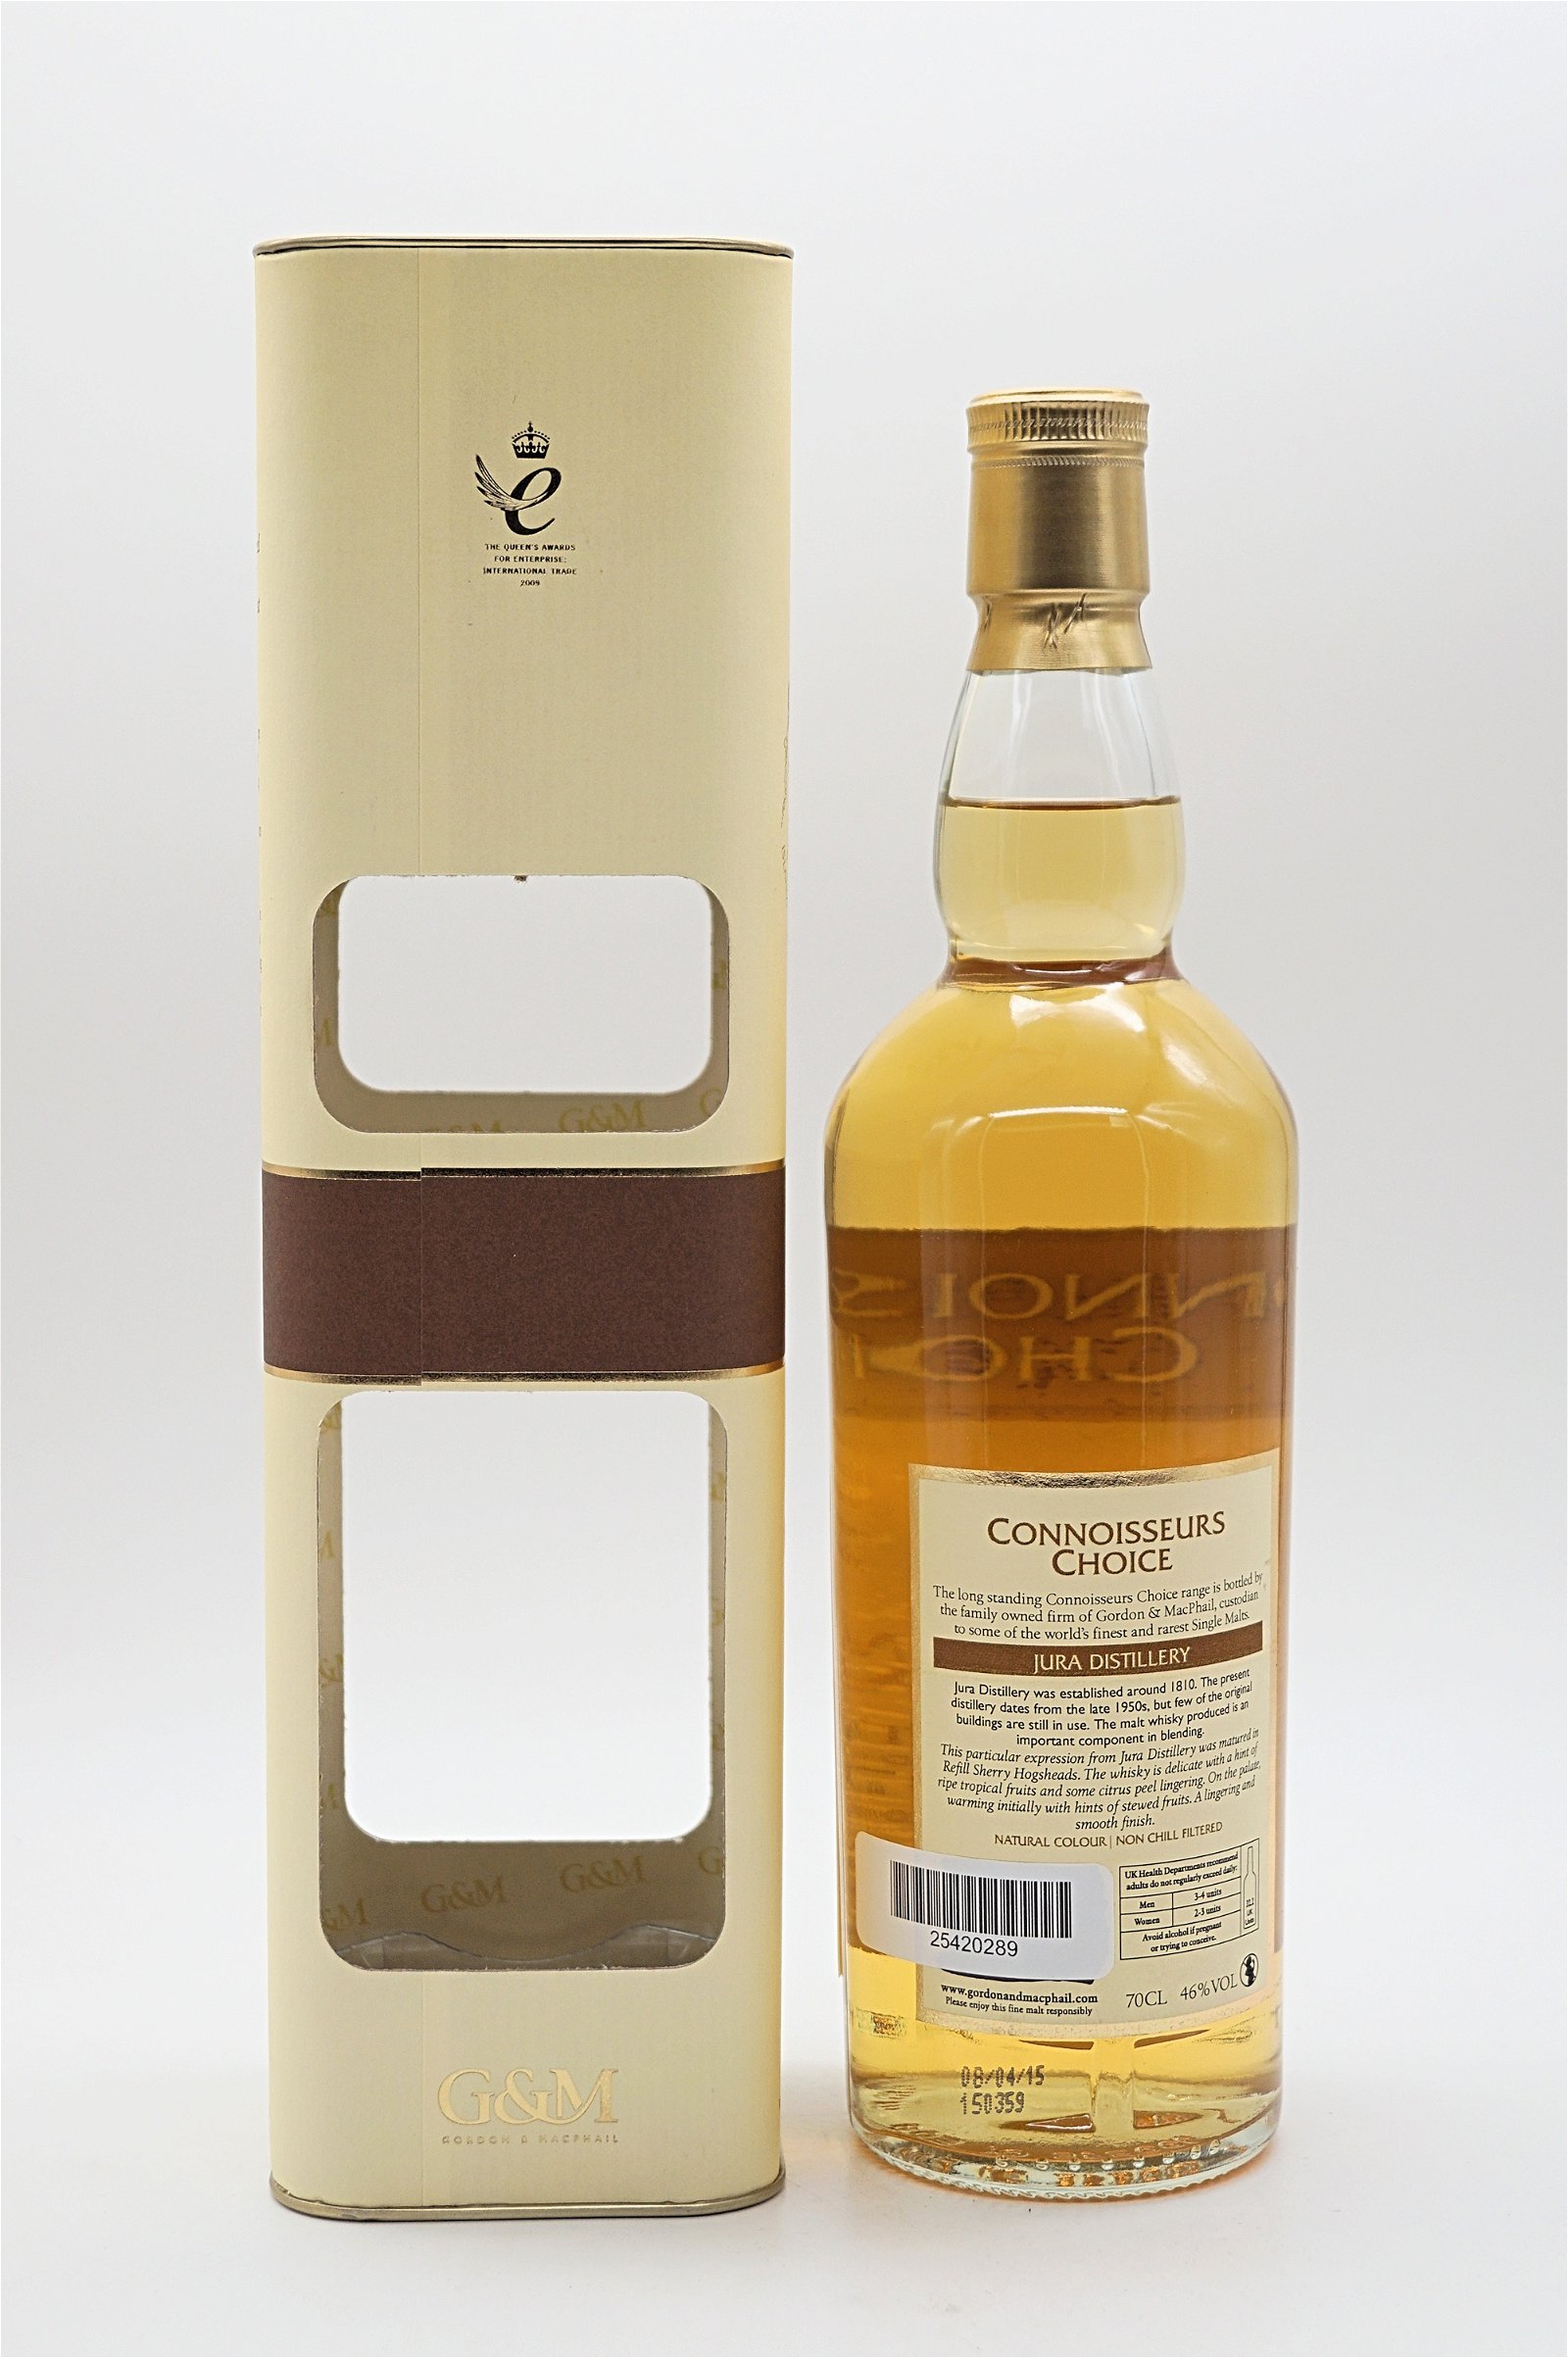 Gordon & Macphail Connoisseurs Choice Jura 1997/2015 Single Malt Scotch Whisky